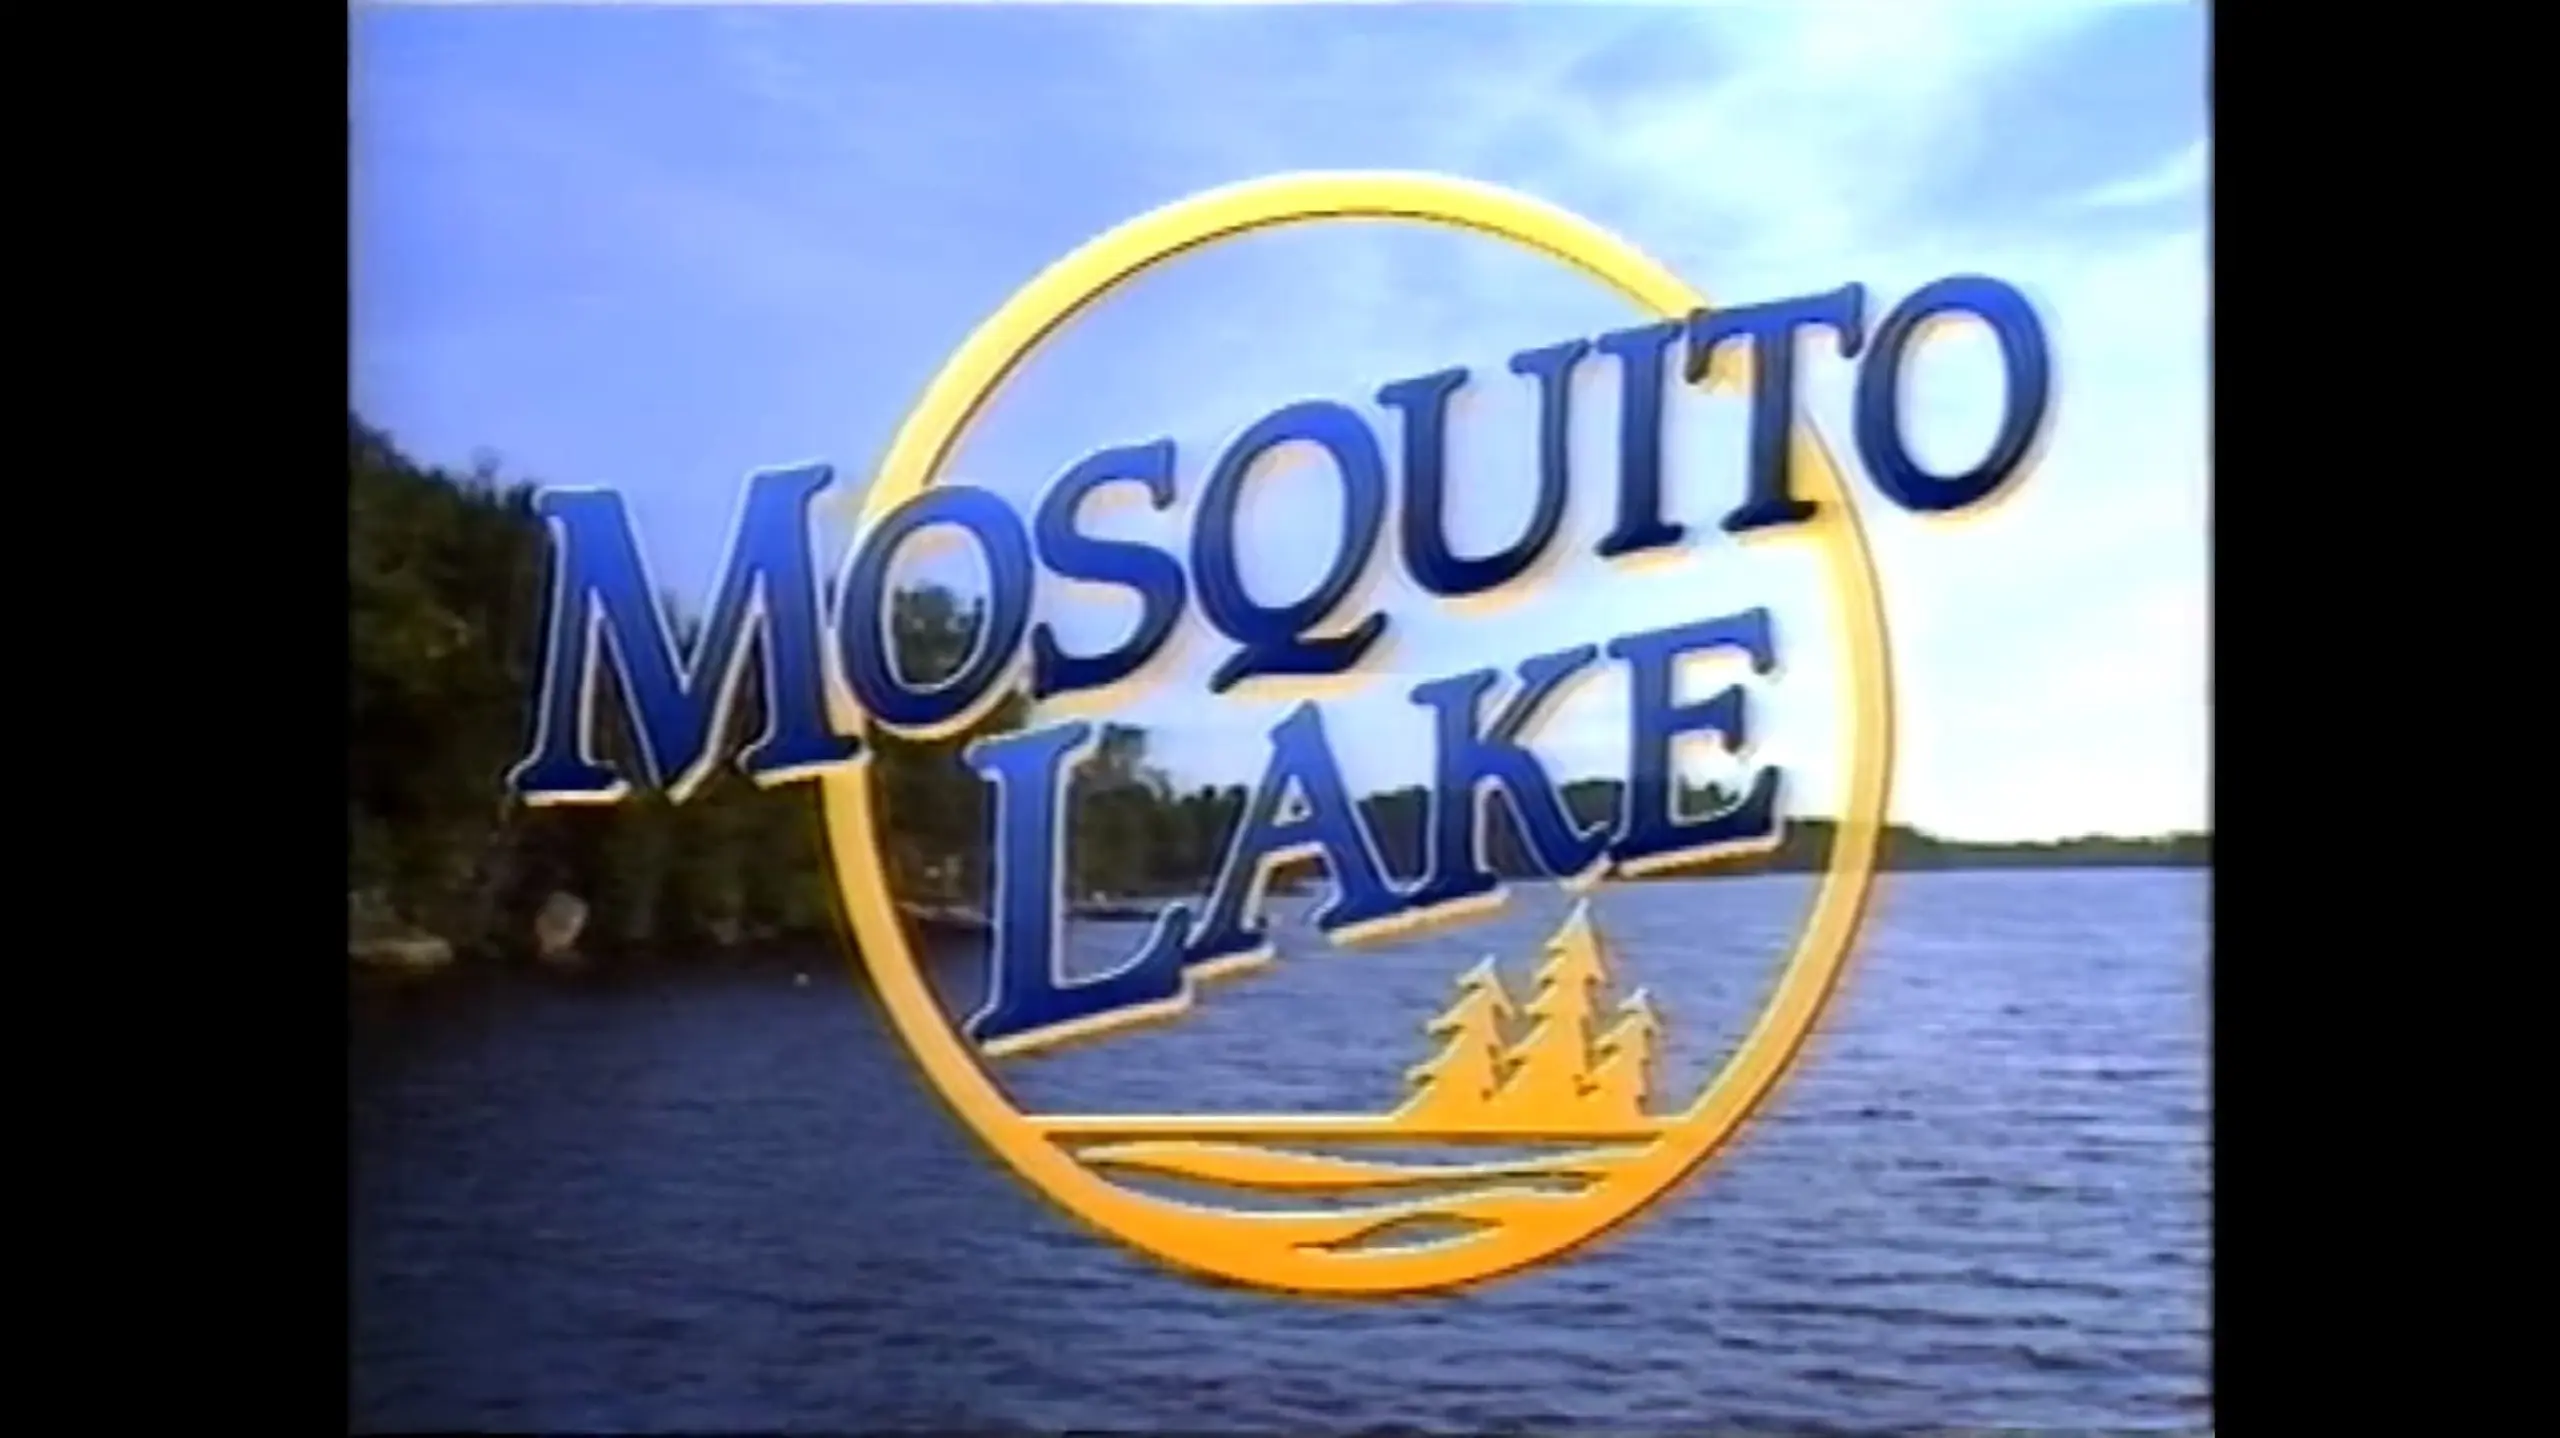 Mosquito Lake